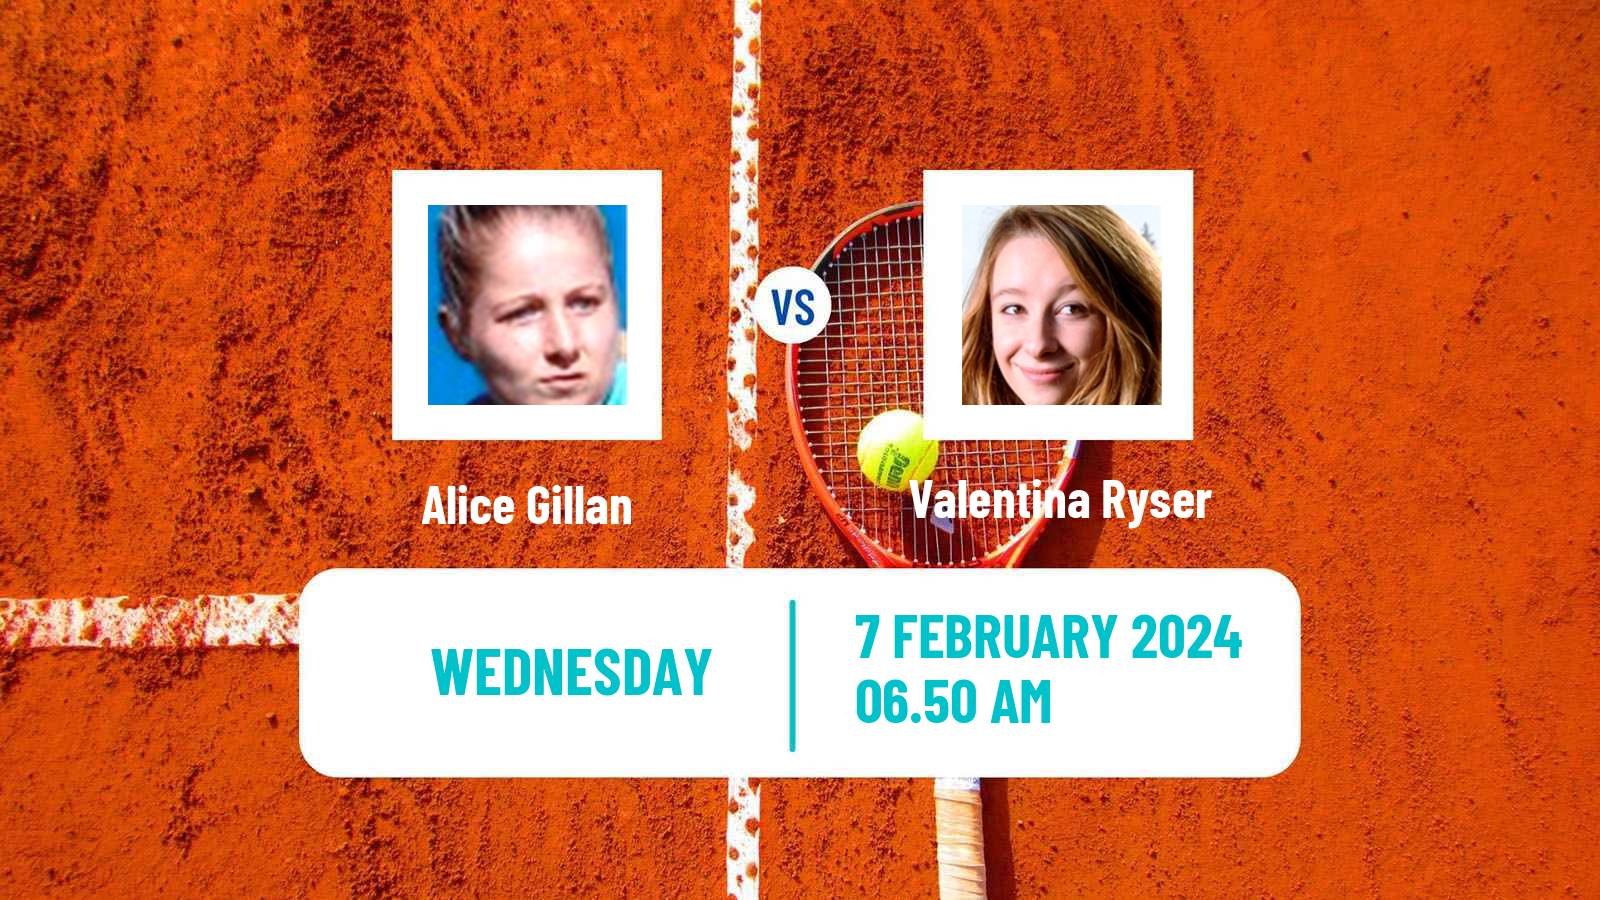 Tennis ITF W50 Edgbaston Women Alice Gillan - Valentina Ryser